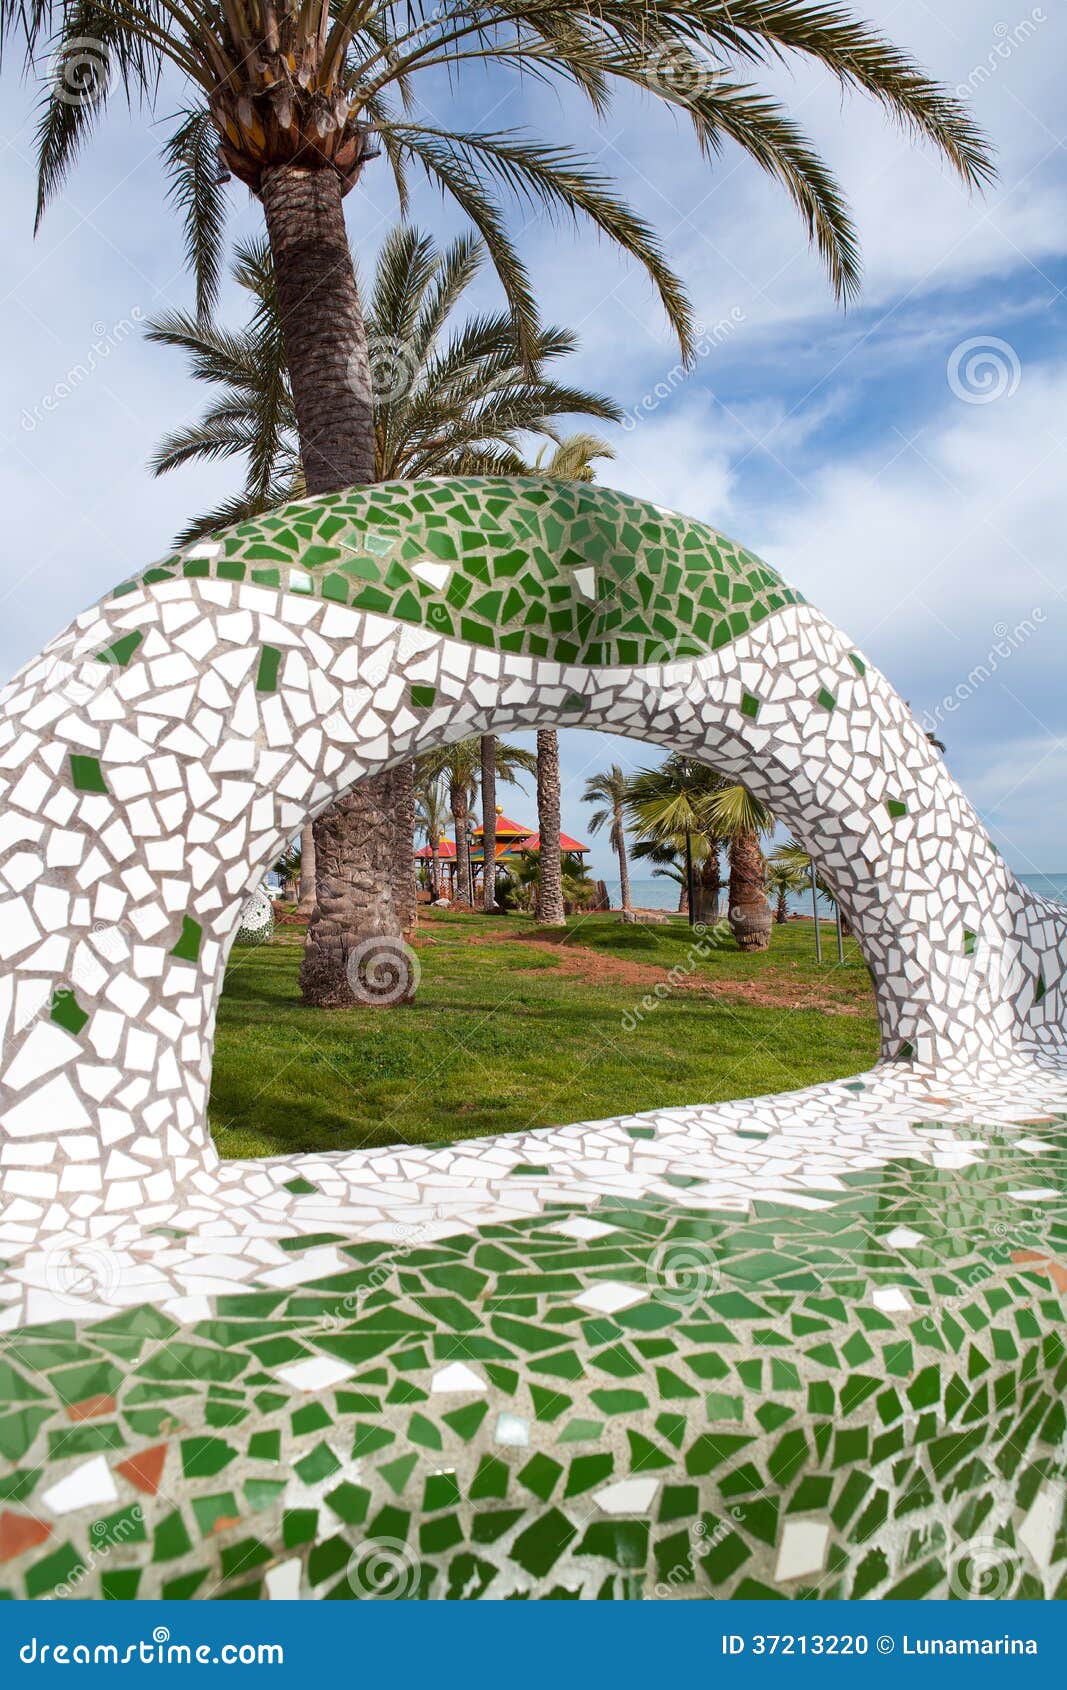 oropesa del mar castellon beach gardens tiles mosaic